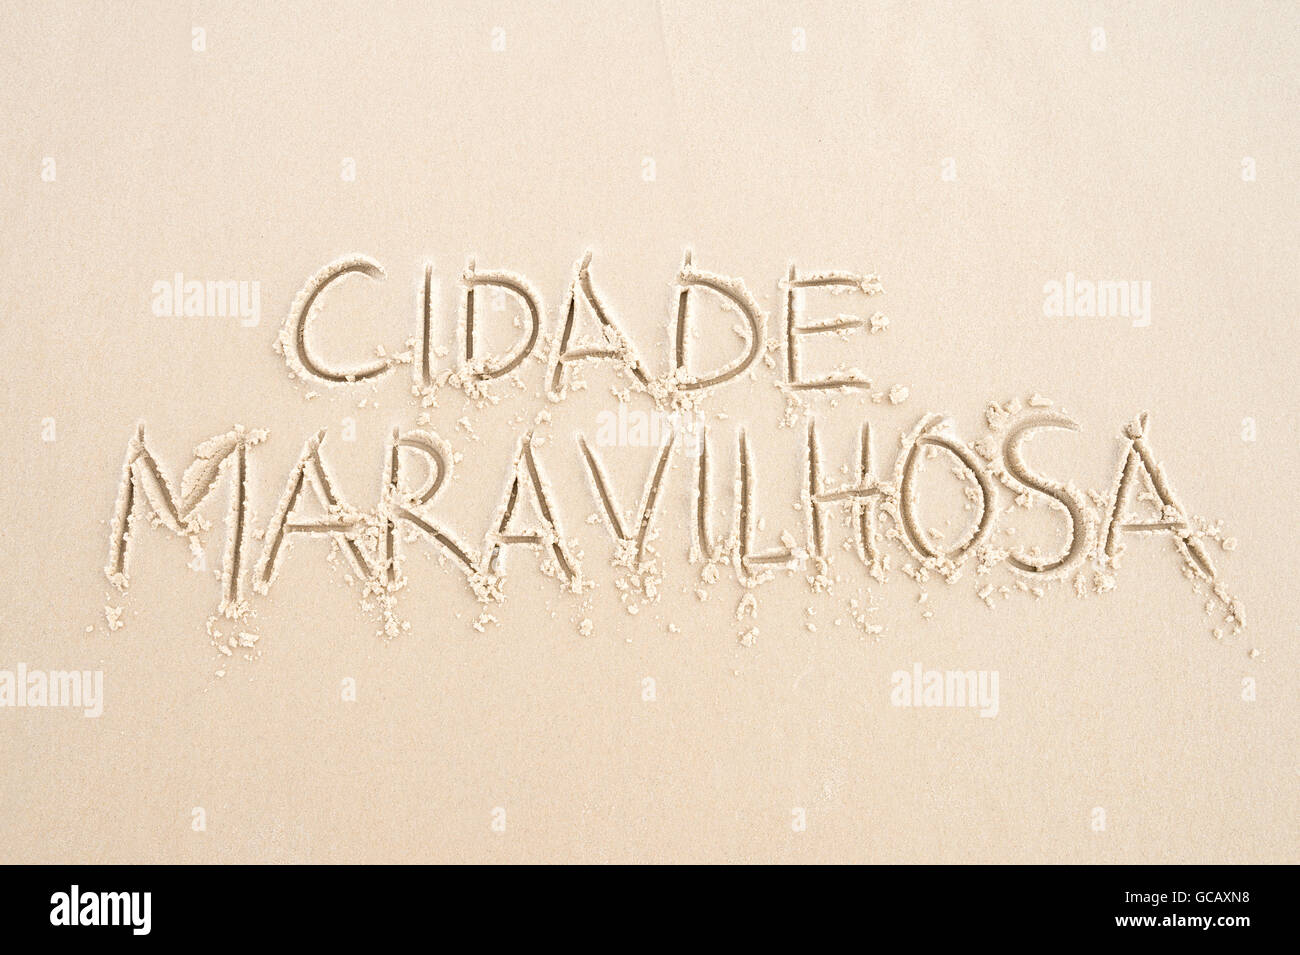 Cidade Maravilhosa (Portuguese for Marvellous City, the nickname of Rio de Janeiro, Brazil) message written in smooth sand Stock Photo